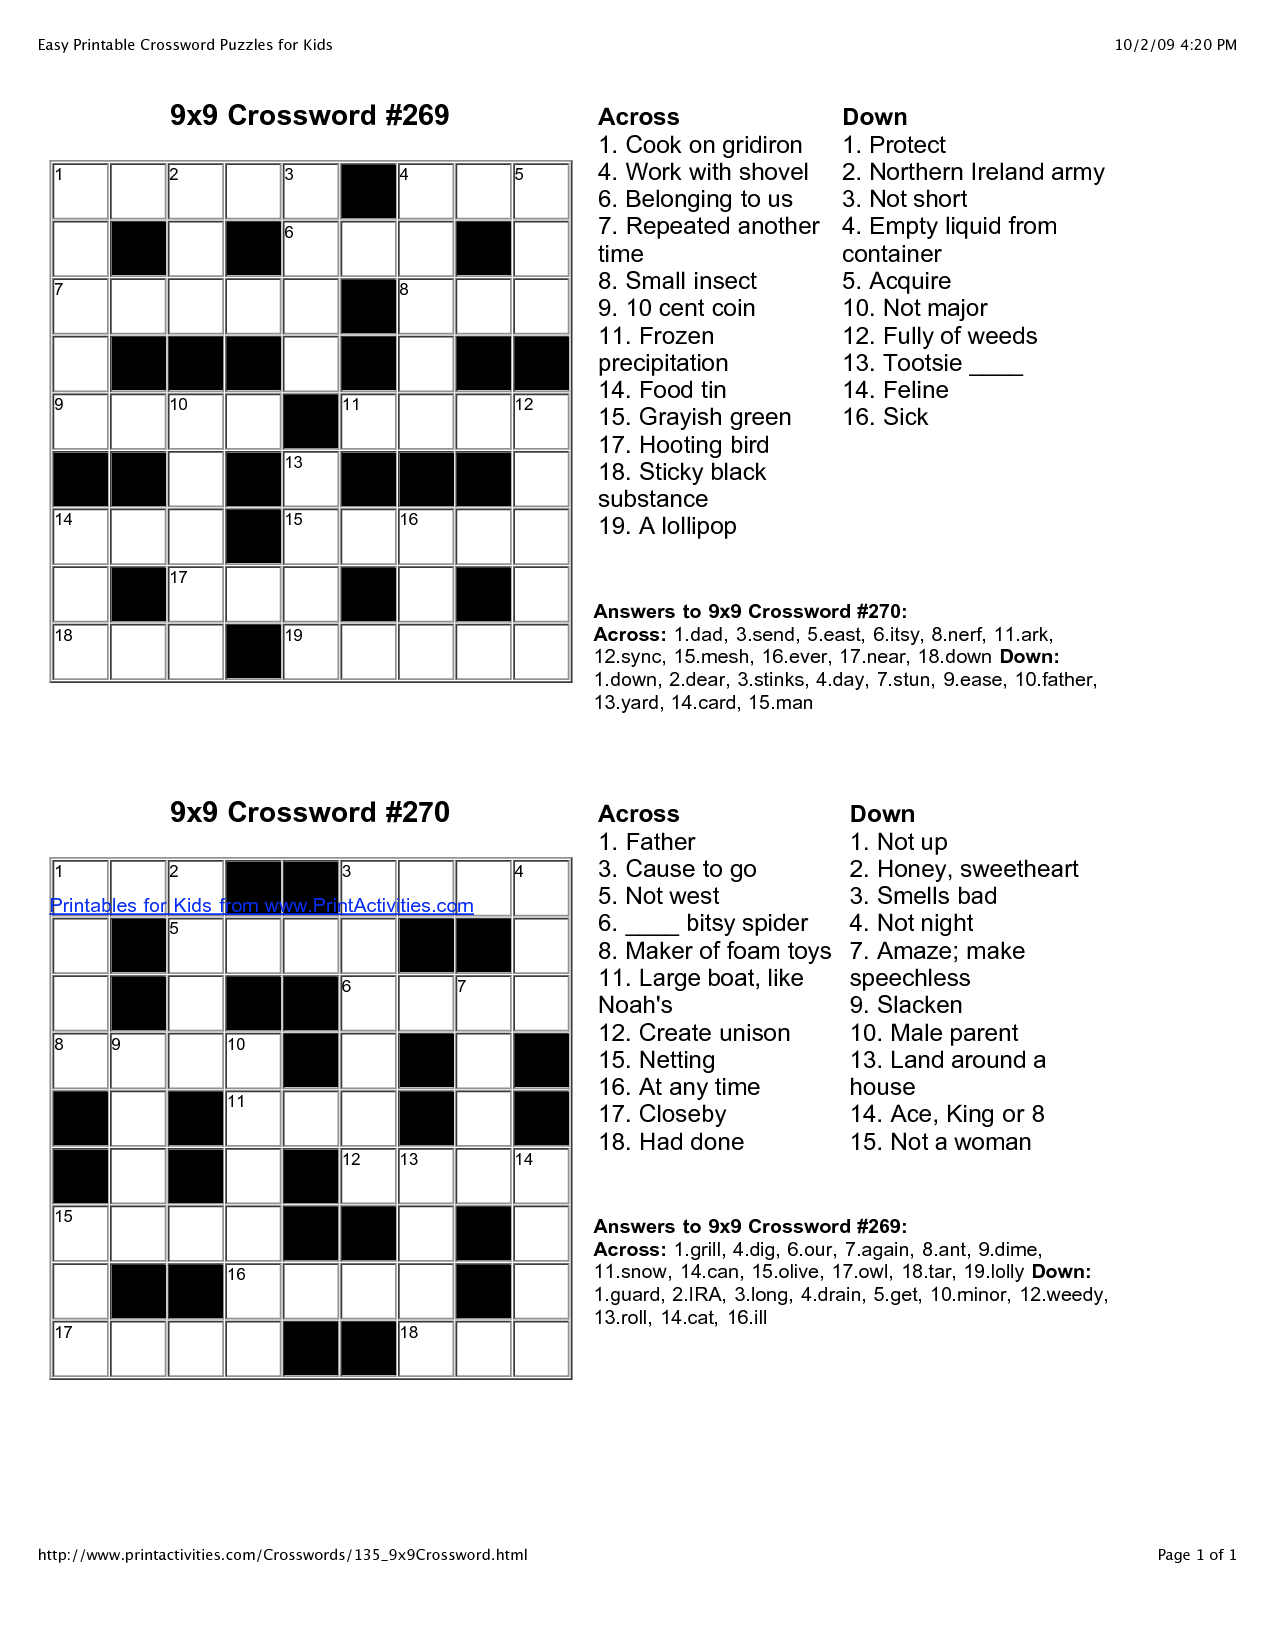 English Language Crossword Puzzles Printable